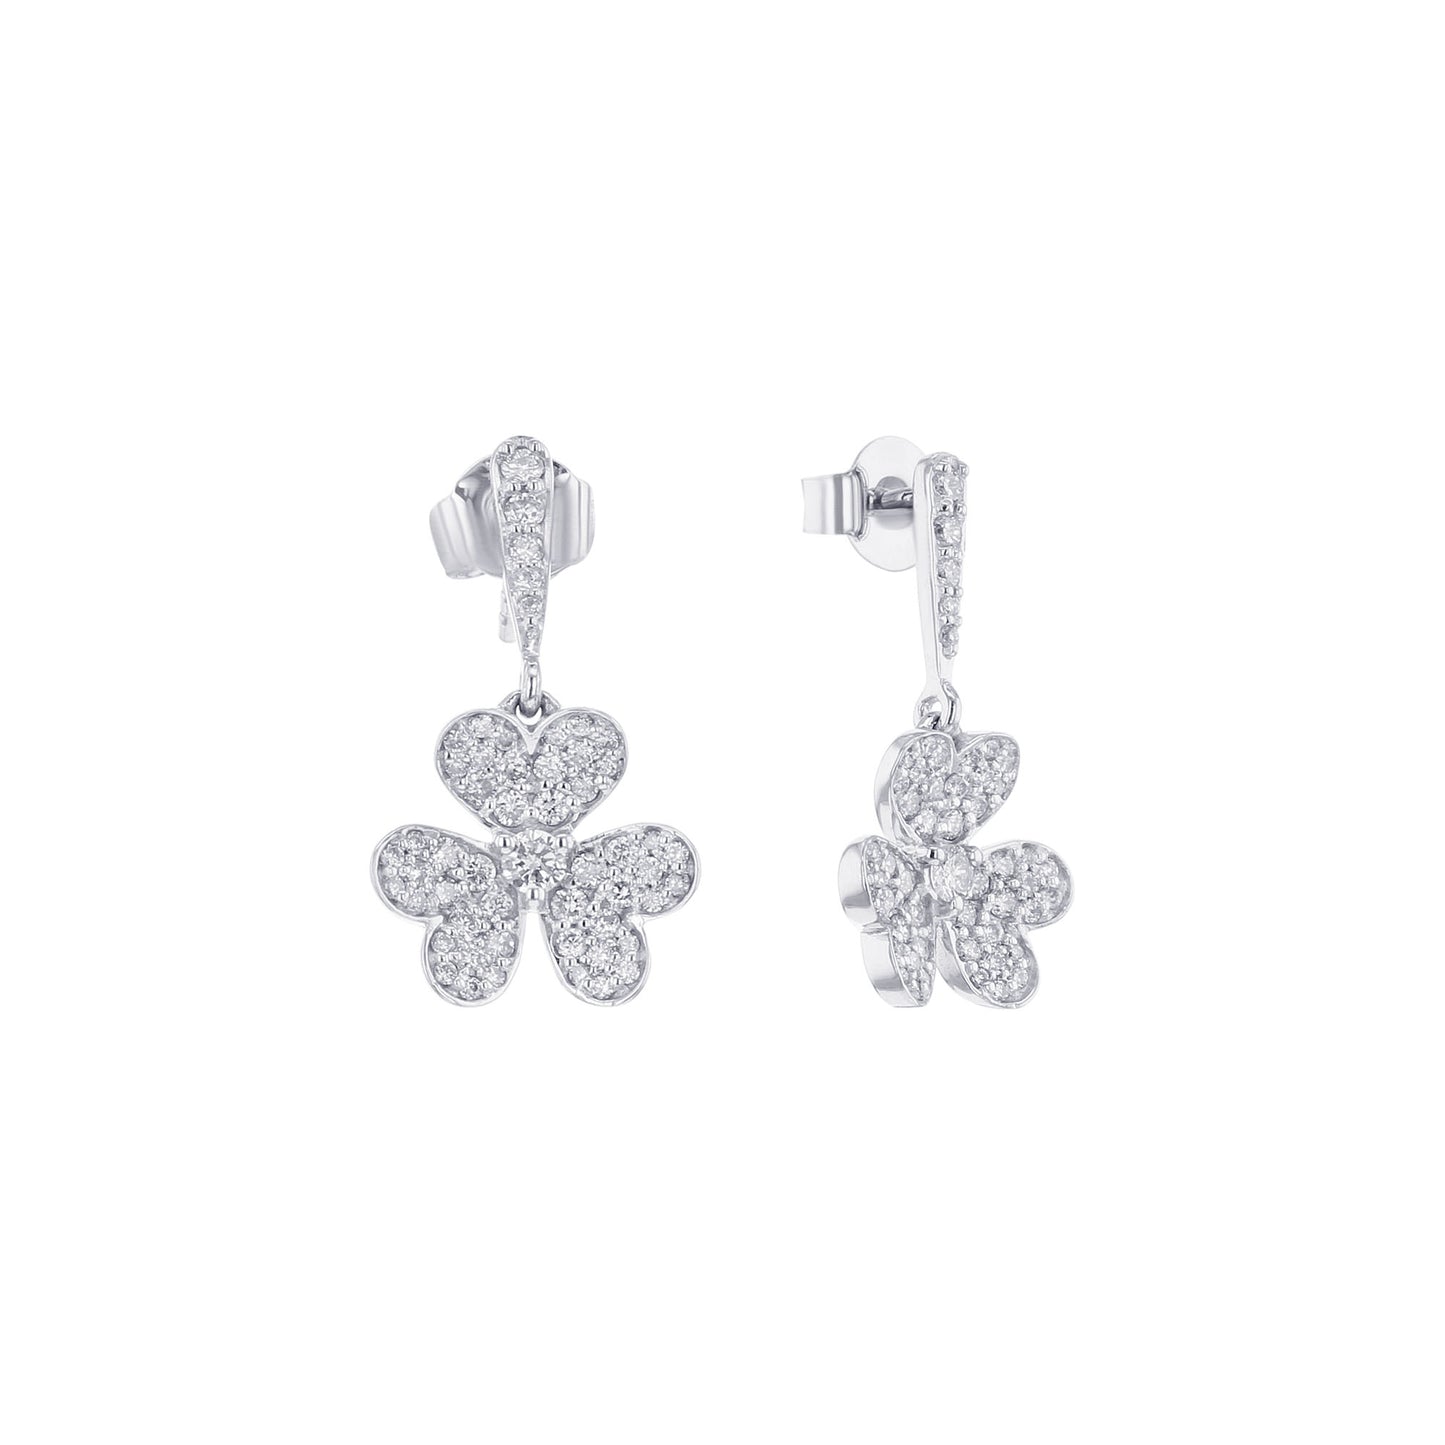 Petals of Love Diamond Earrings